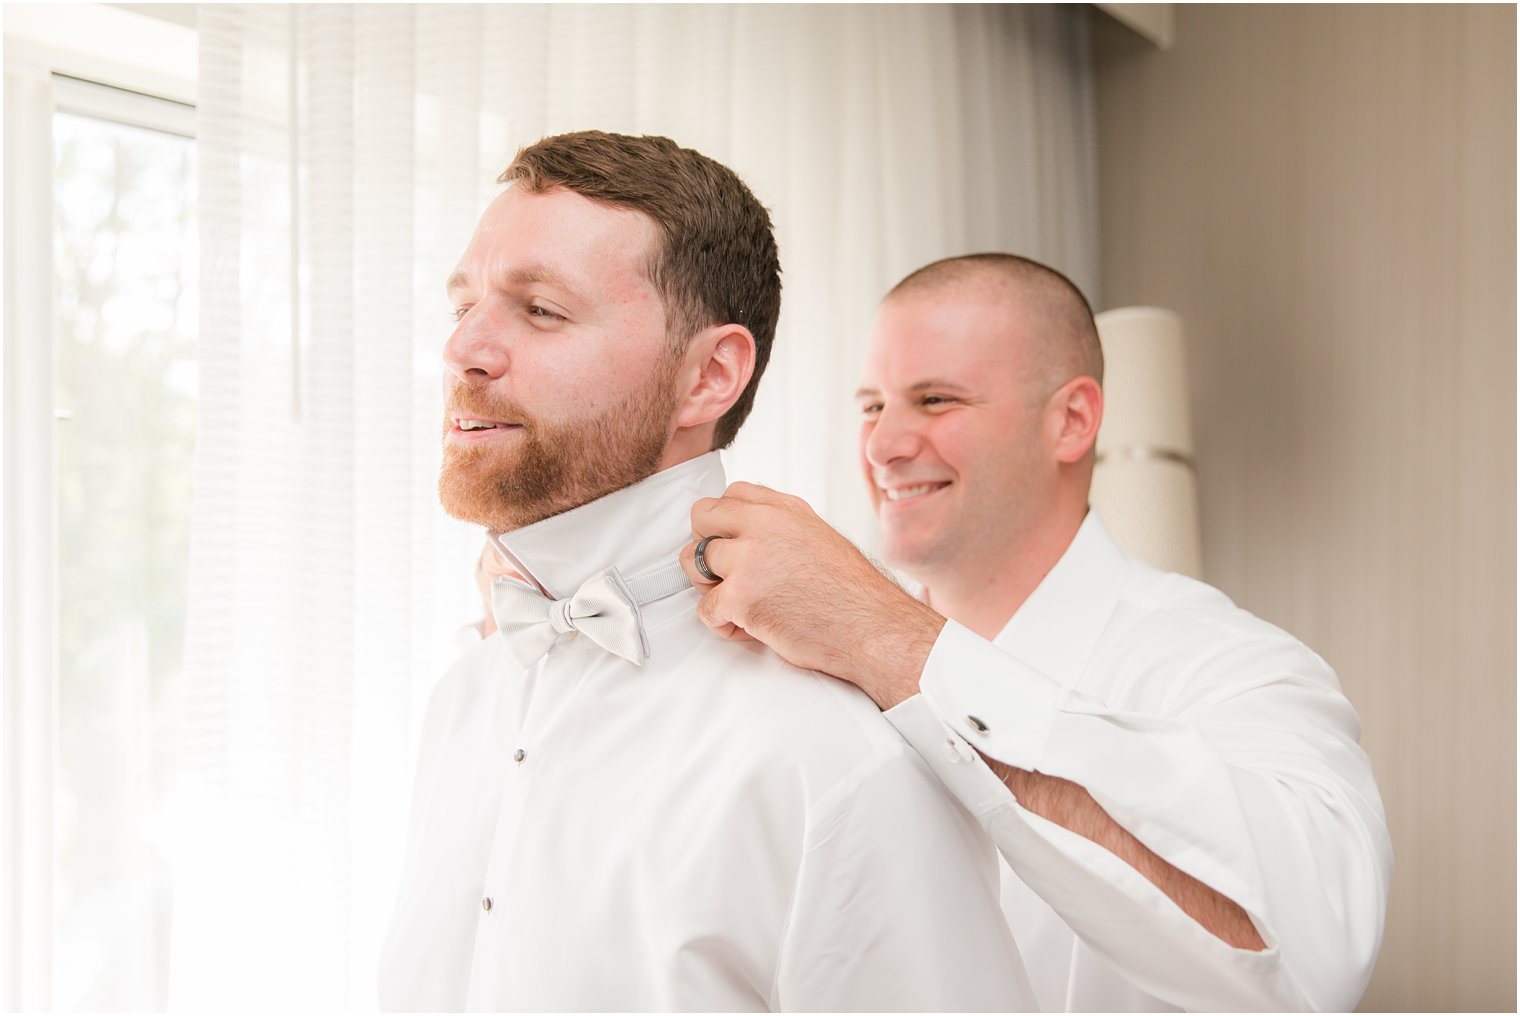 Best man helping groom put on bow tie